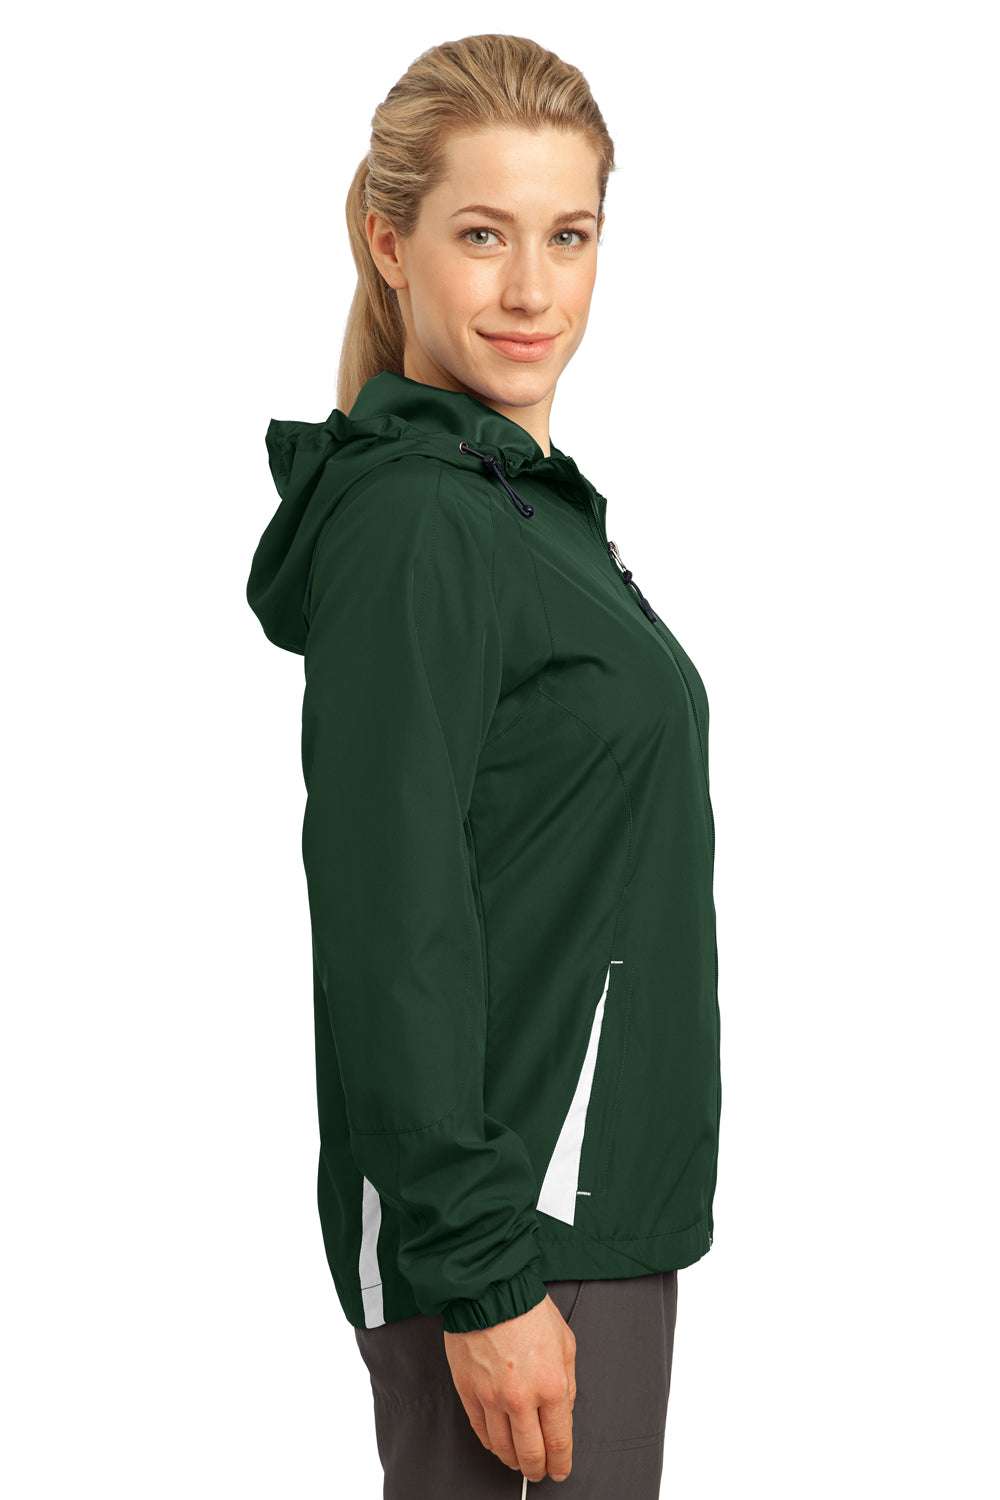 Sport-Tek LST76 Womens Water Resistant Full Zip Hooded Jacket Forest Green Side